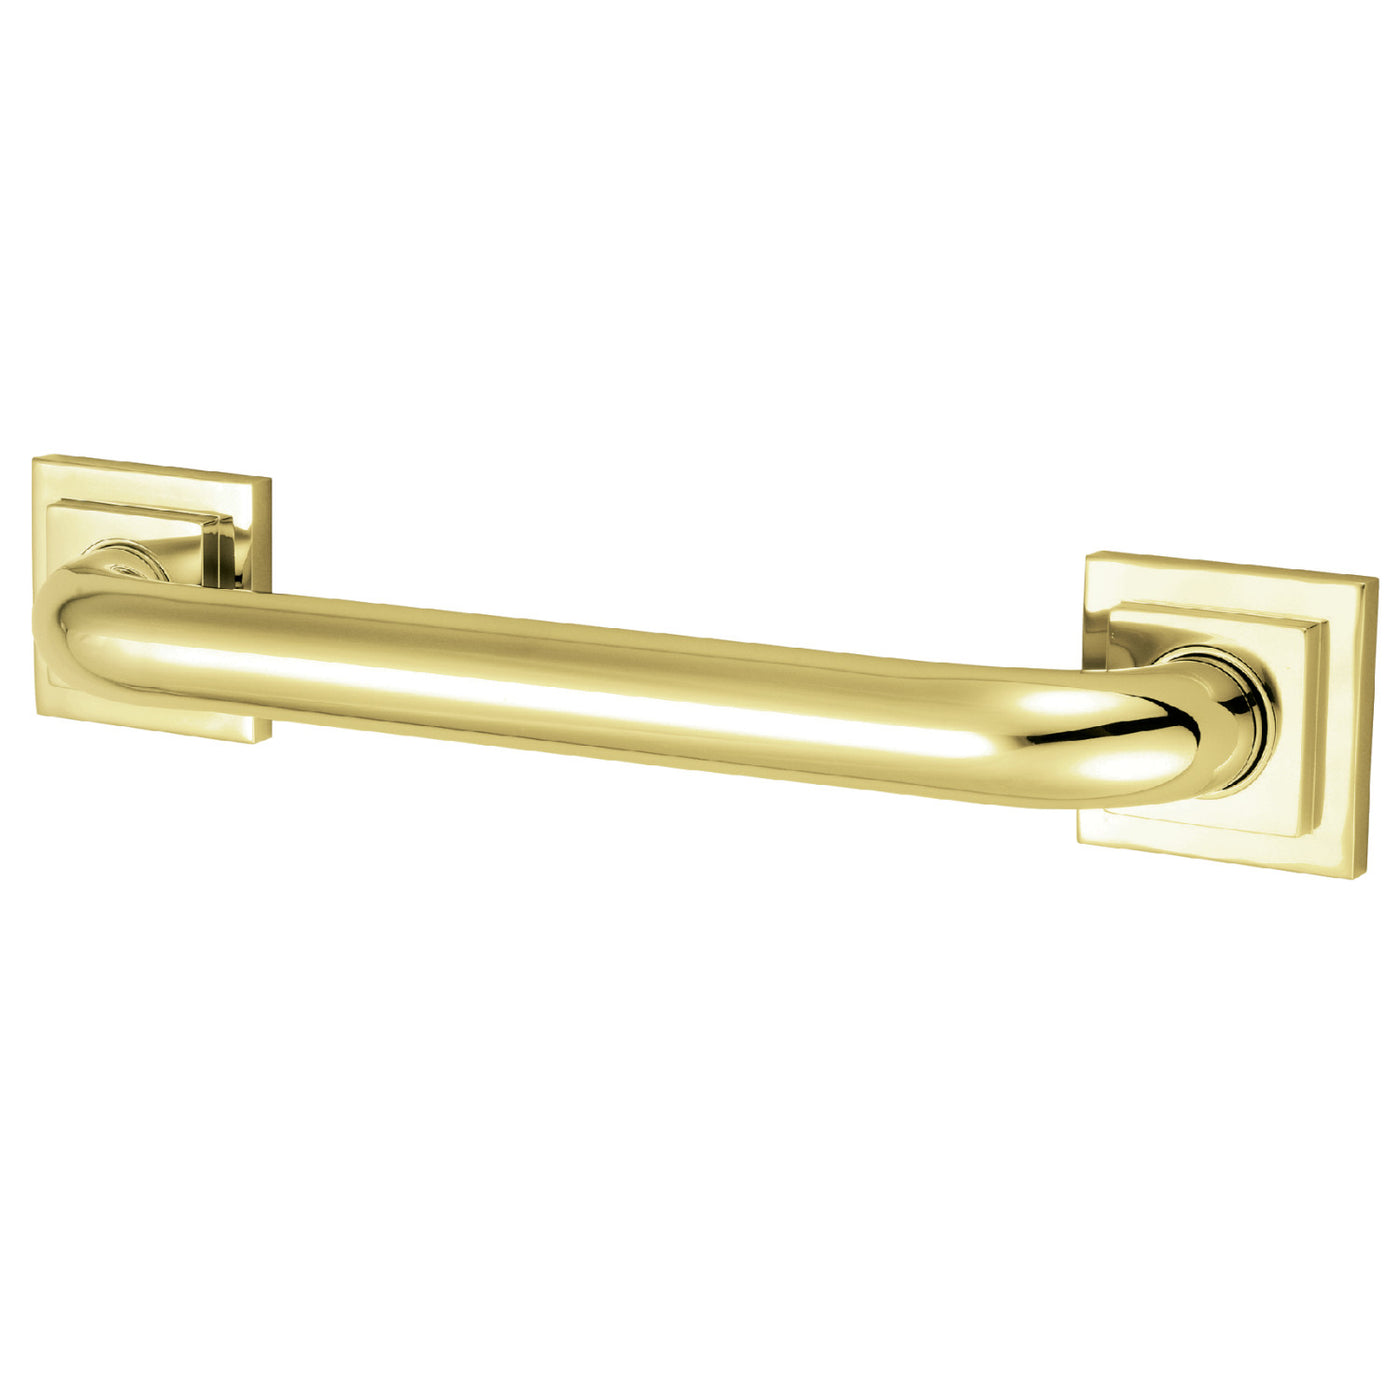 Elements of Design EDR614322 32-Inch x 1-1/4-Inch O.D Grab Bar, Polished Brass